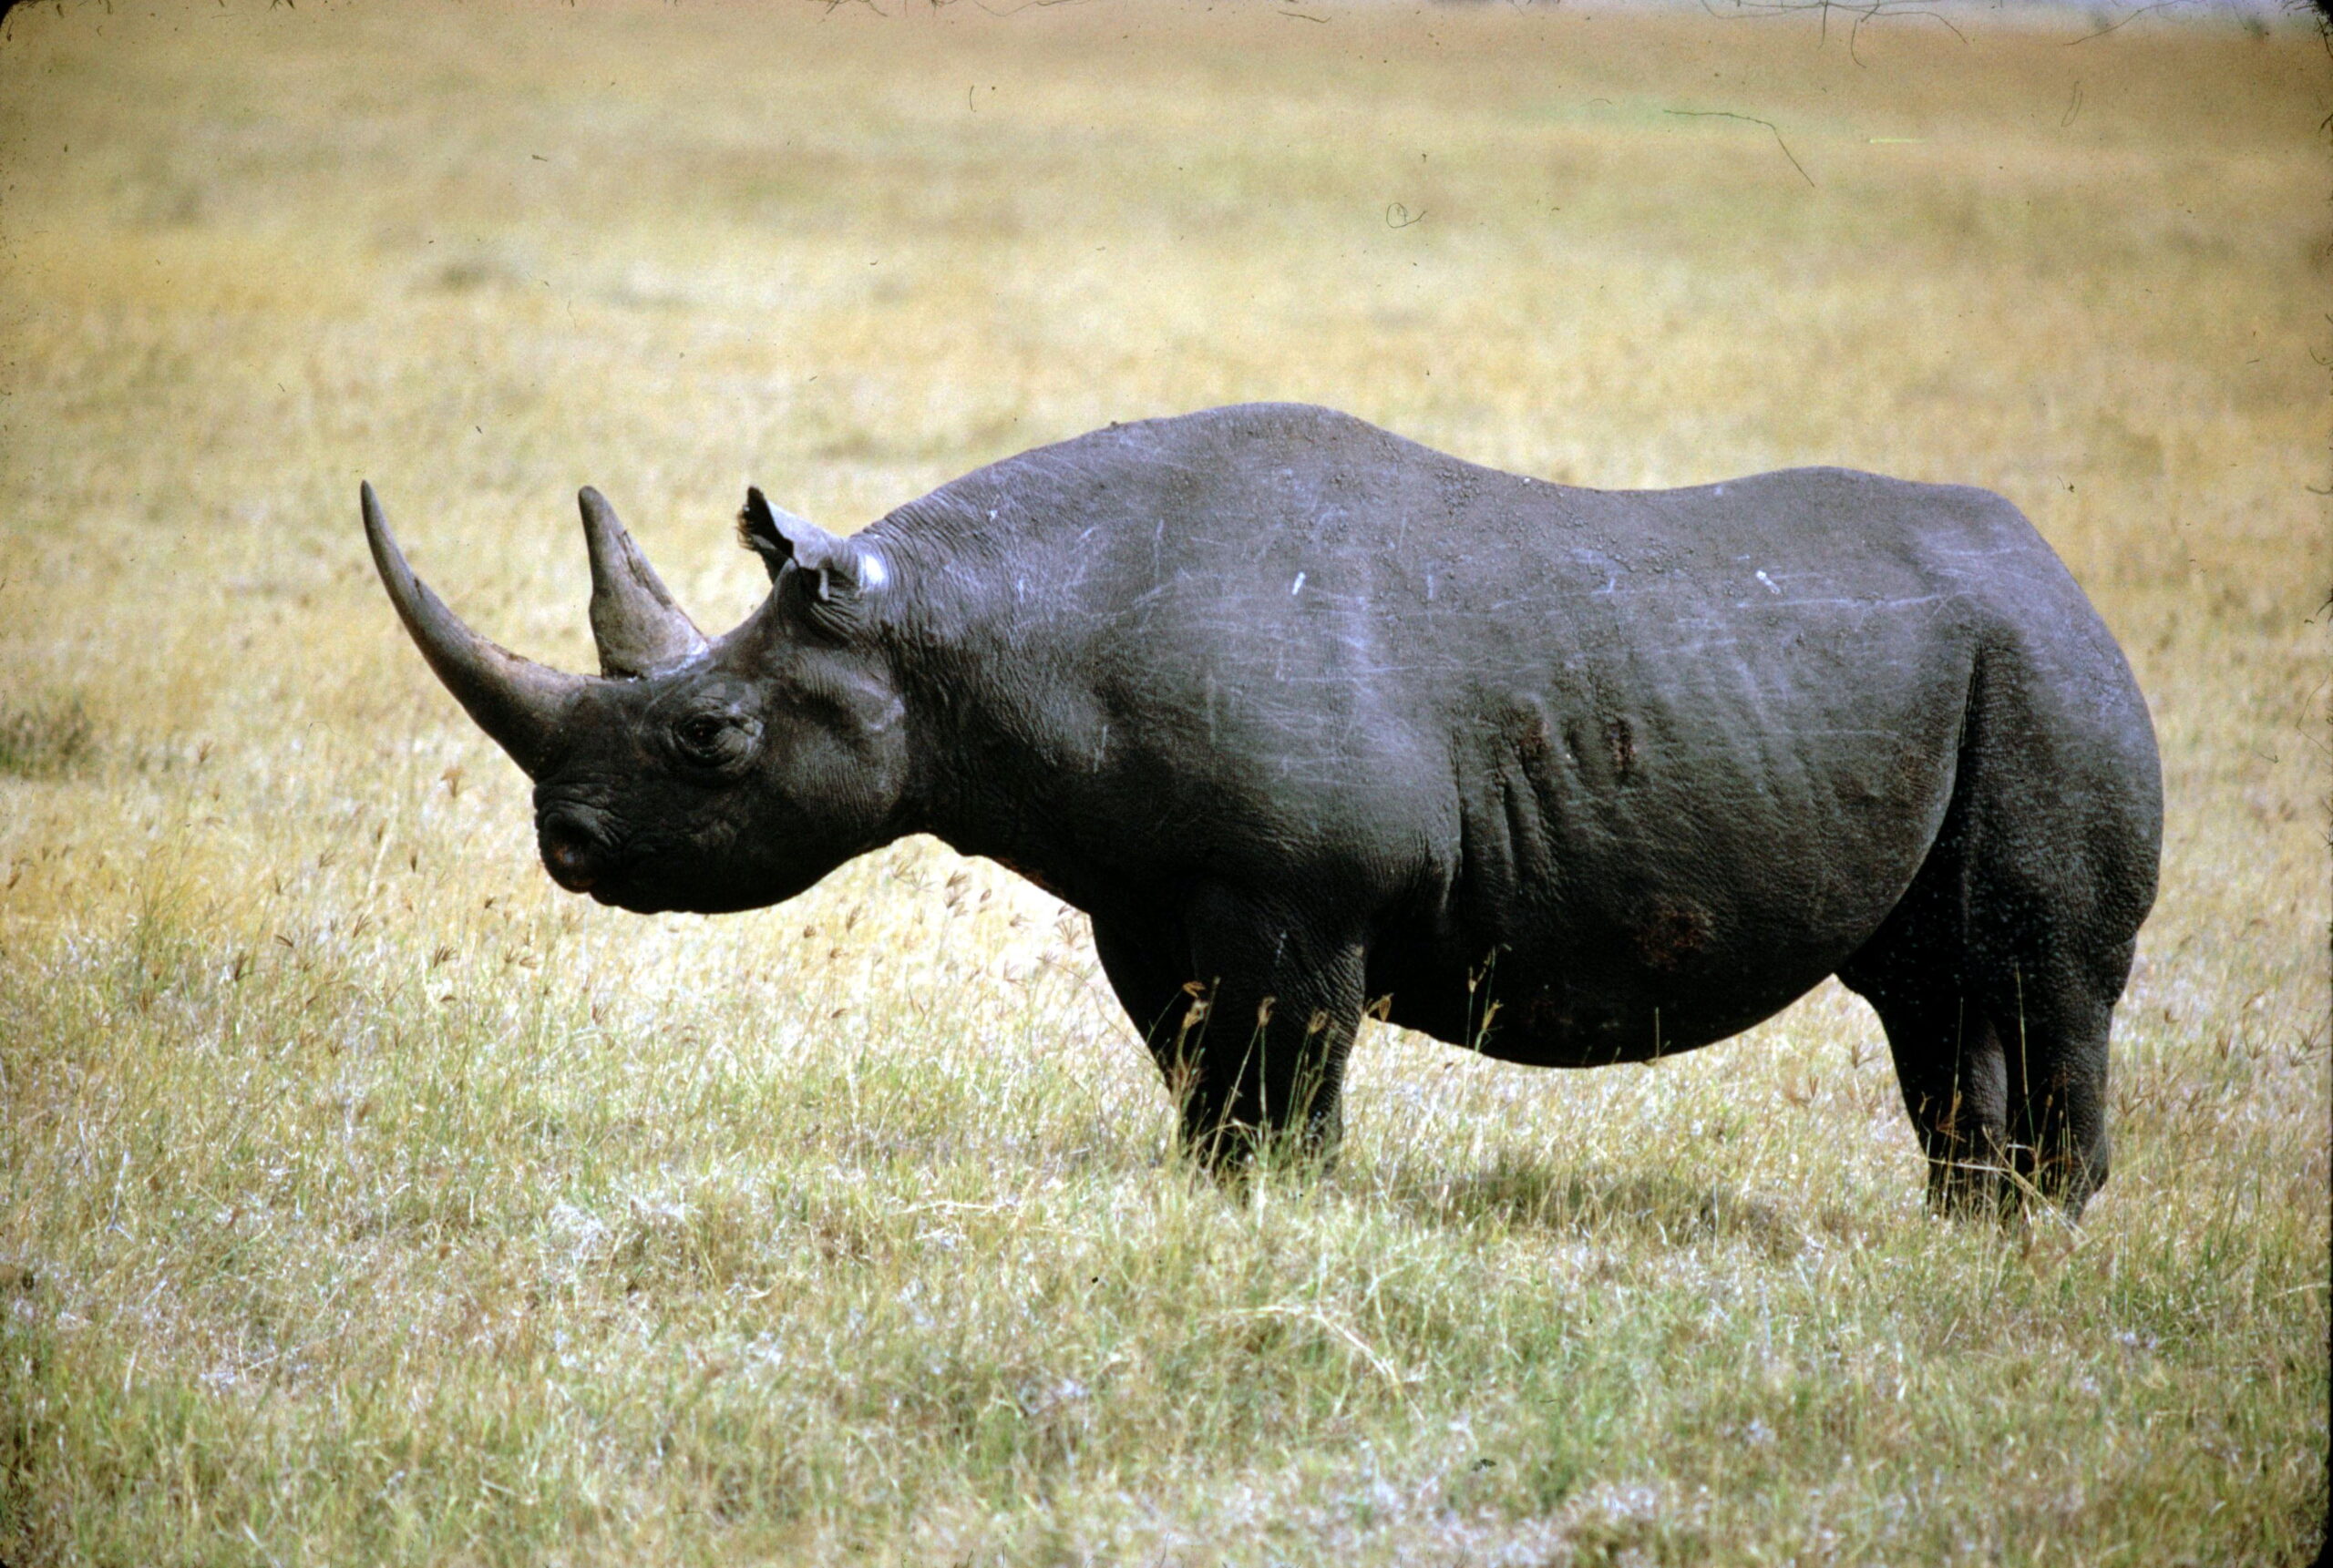 Wildlife photography of black rhinoceros standing on grass